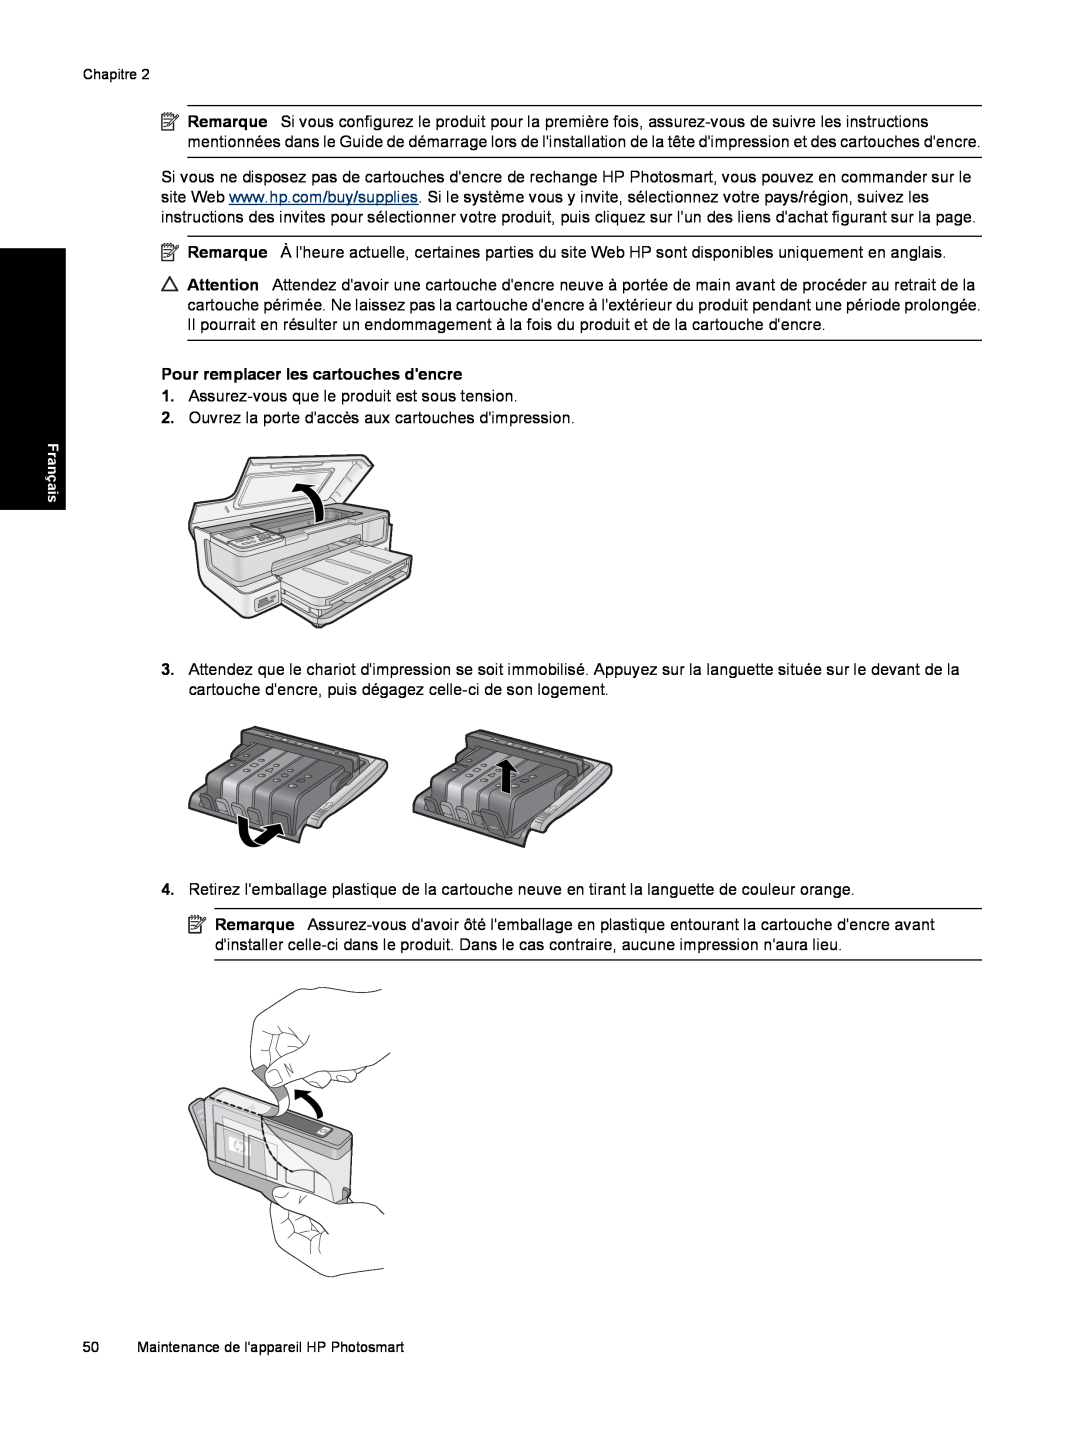 HP B8550 Photo CB981A#B1H manual Pour remplacer les cartouches dencre 